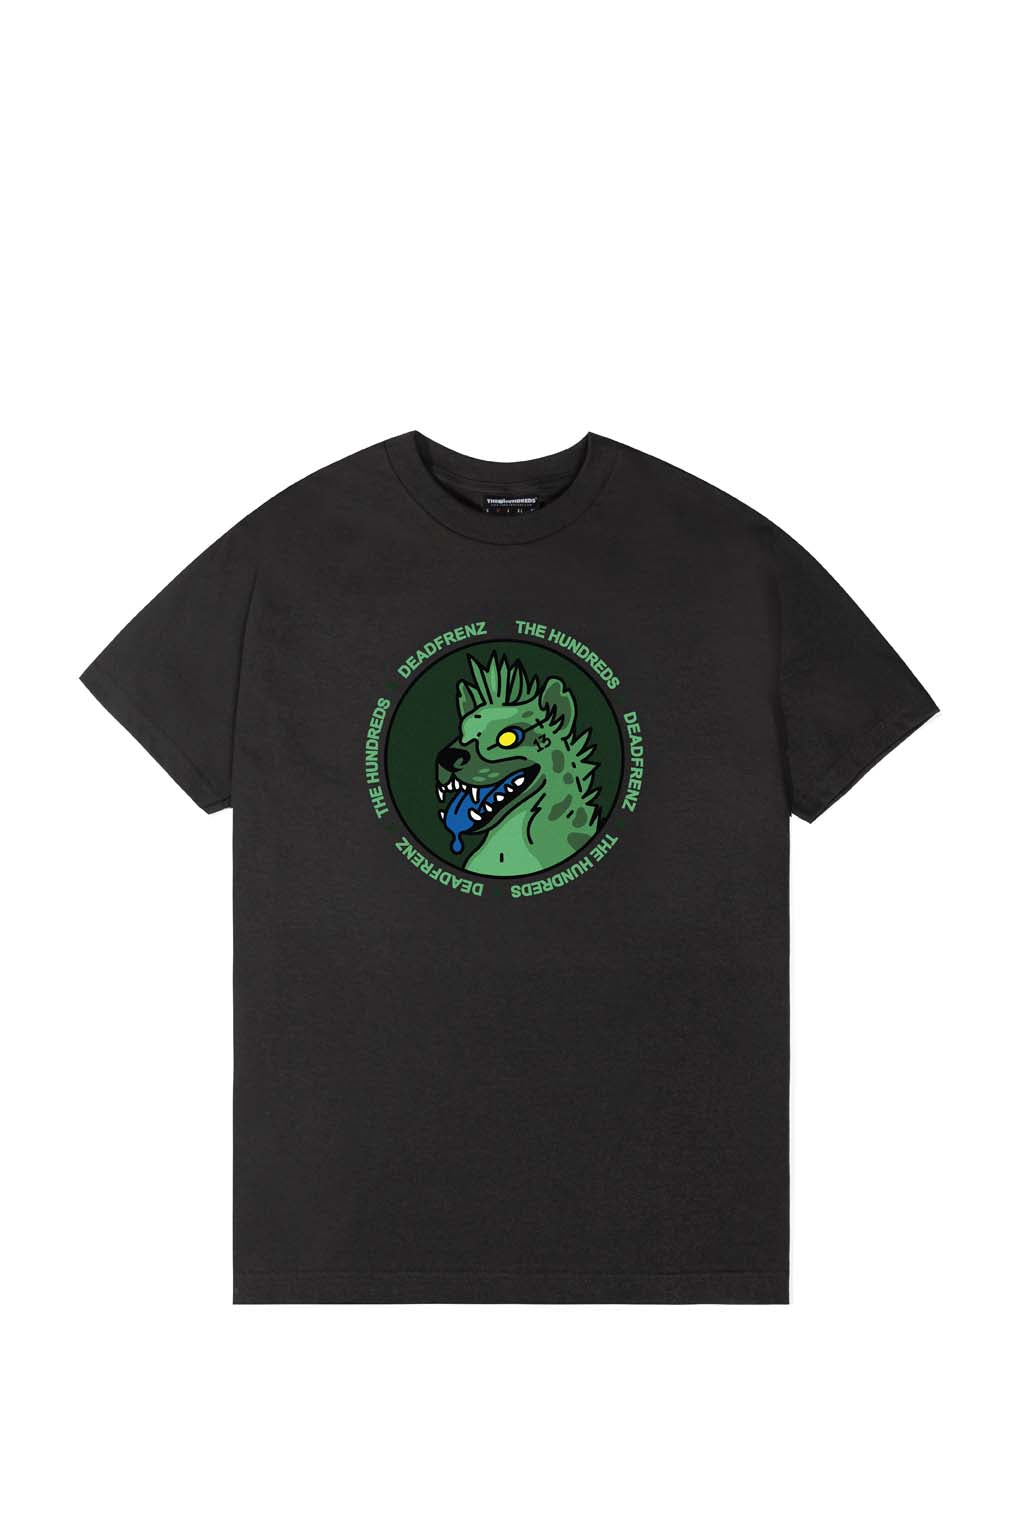 Image of Dead Frenz Hyena T-Shirt